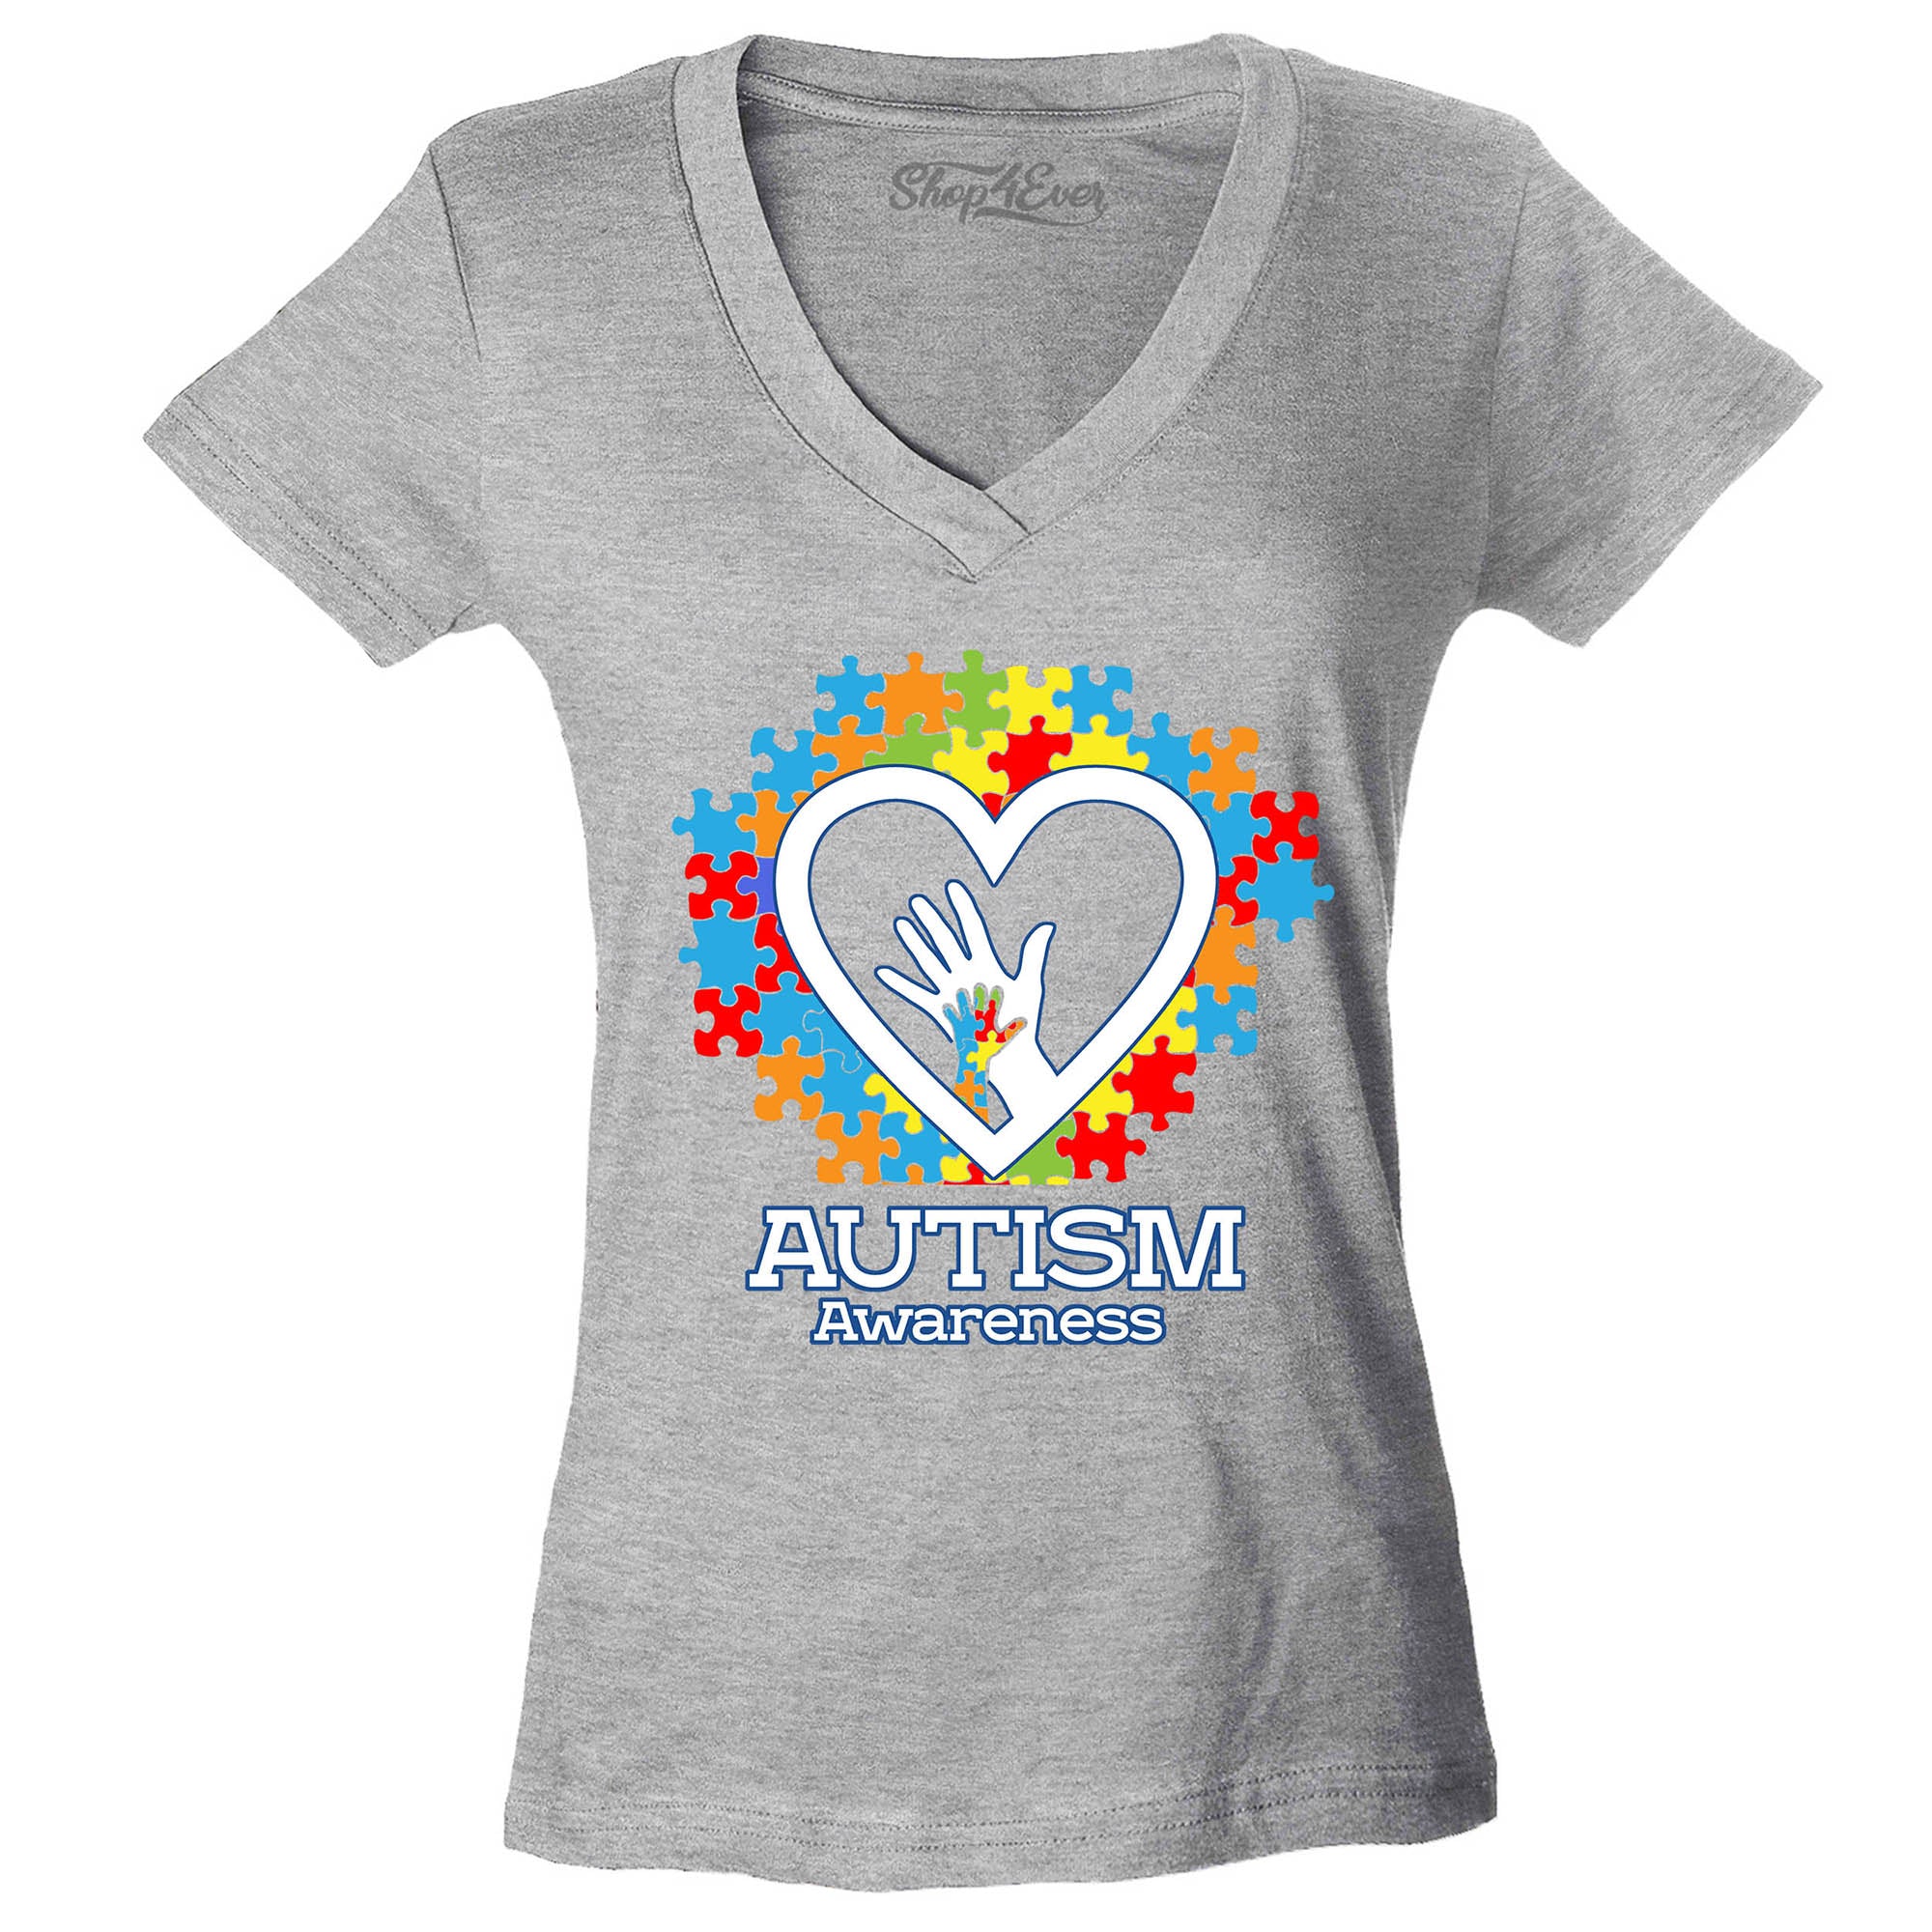 Autism Awareness Hands in Heart Women's V-Neck T-Shirt Slim Fit